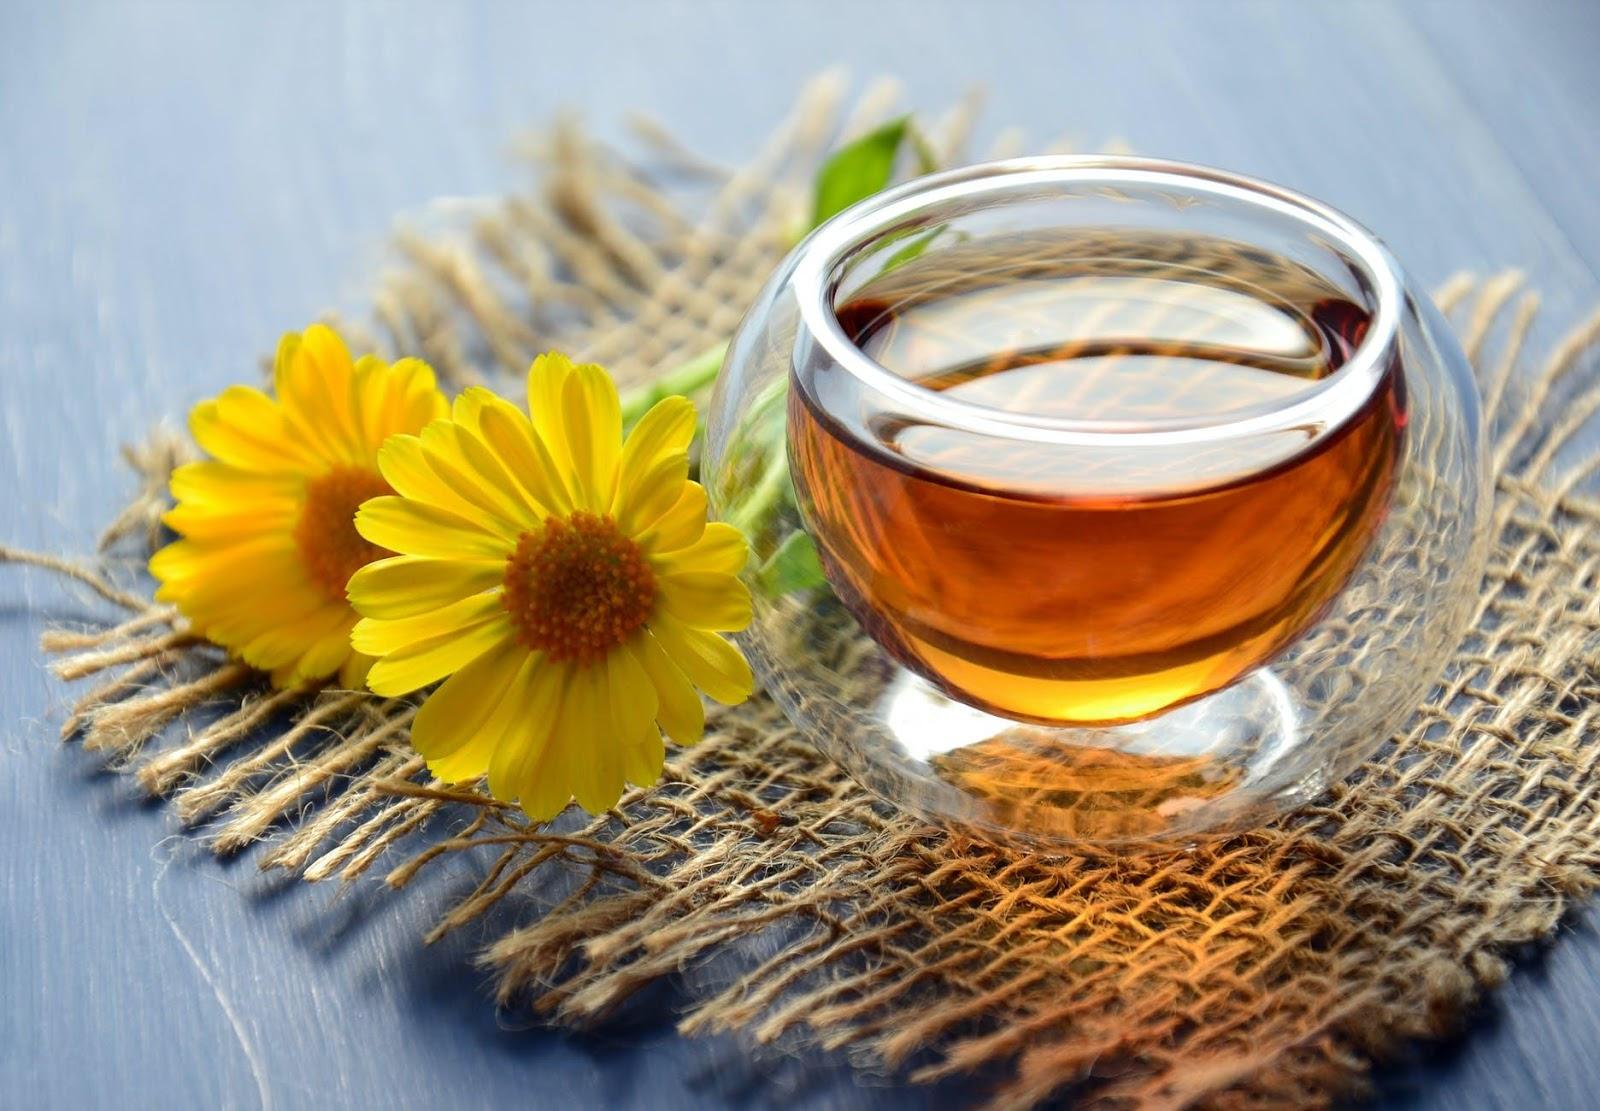 Extravagant Herbal Teas as Wedding Favors